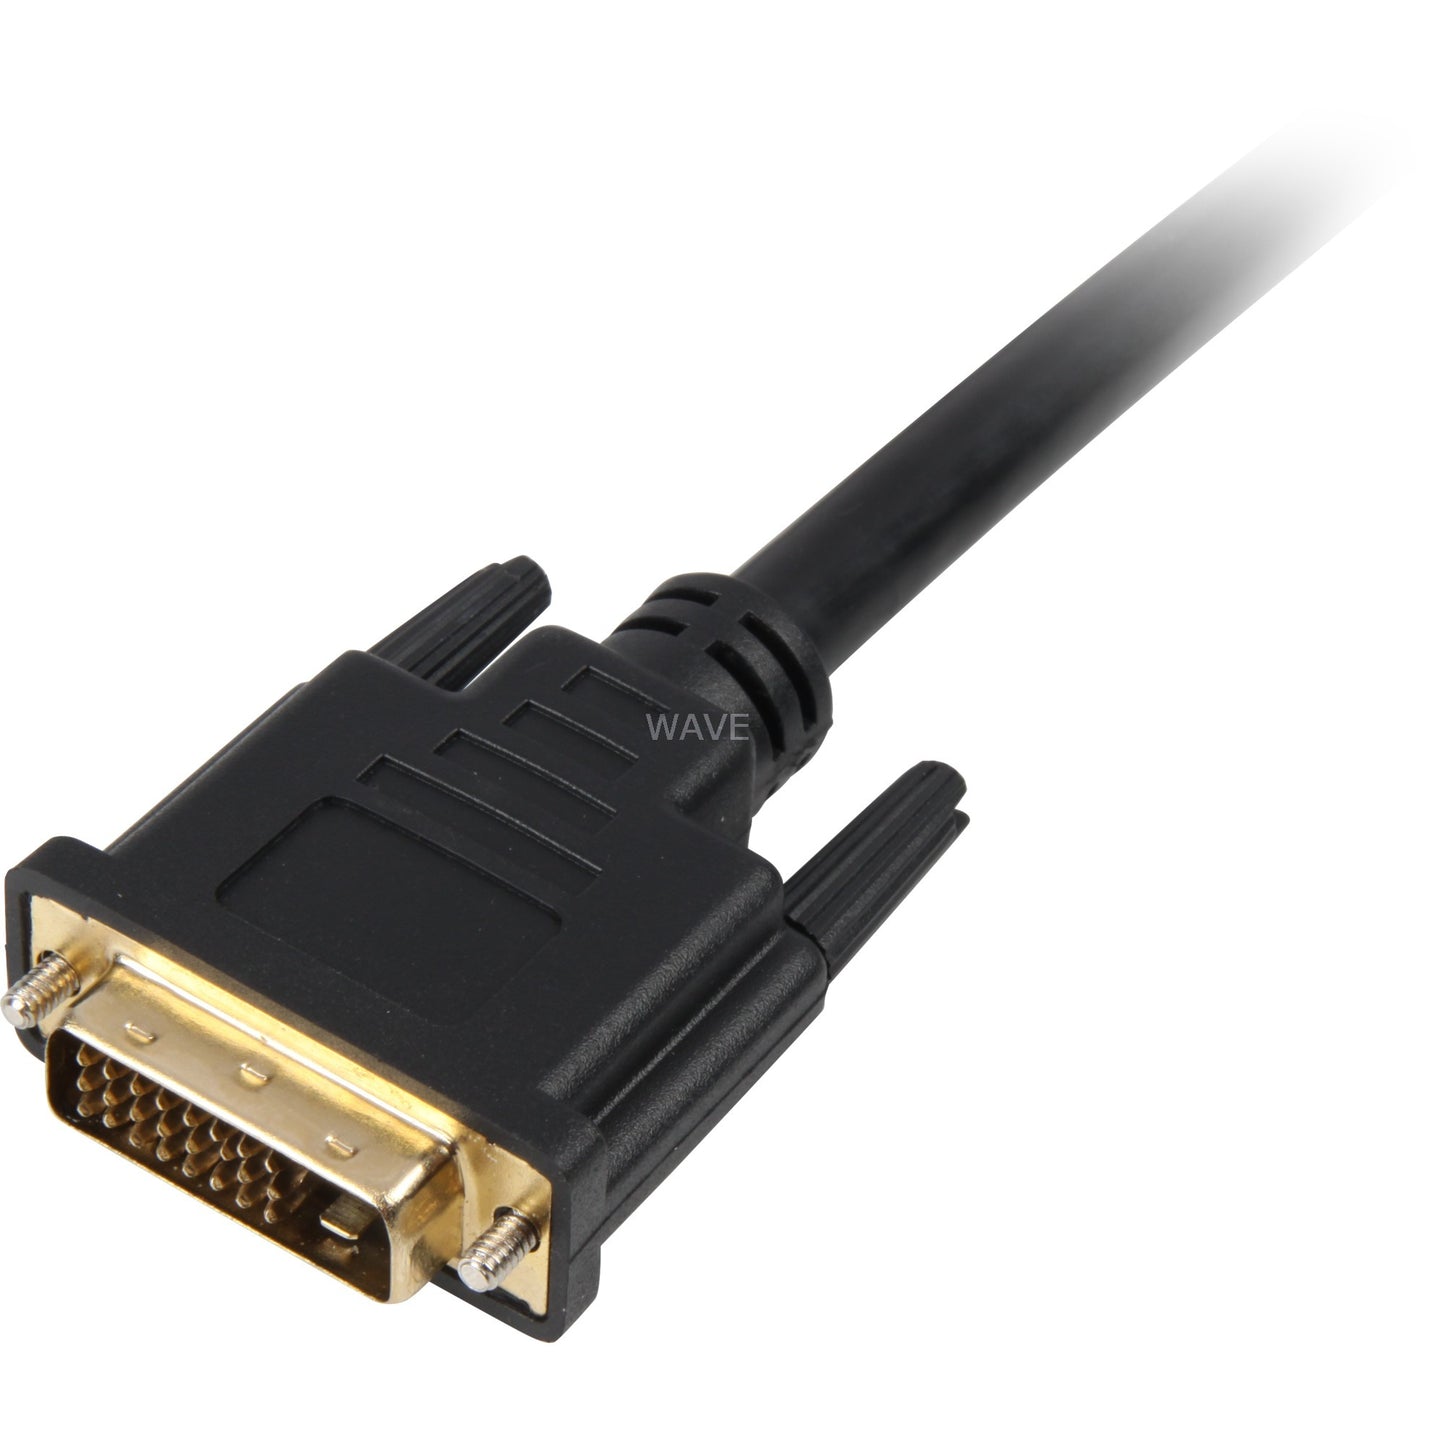 Sharkoon DVI-D kabel